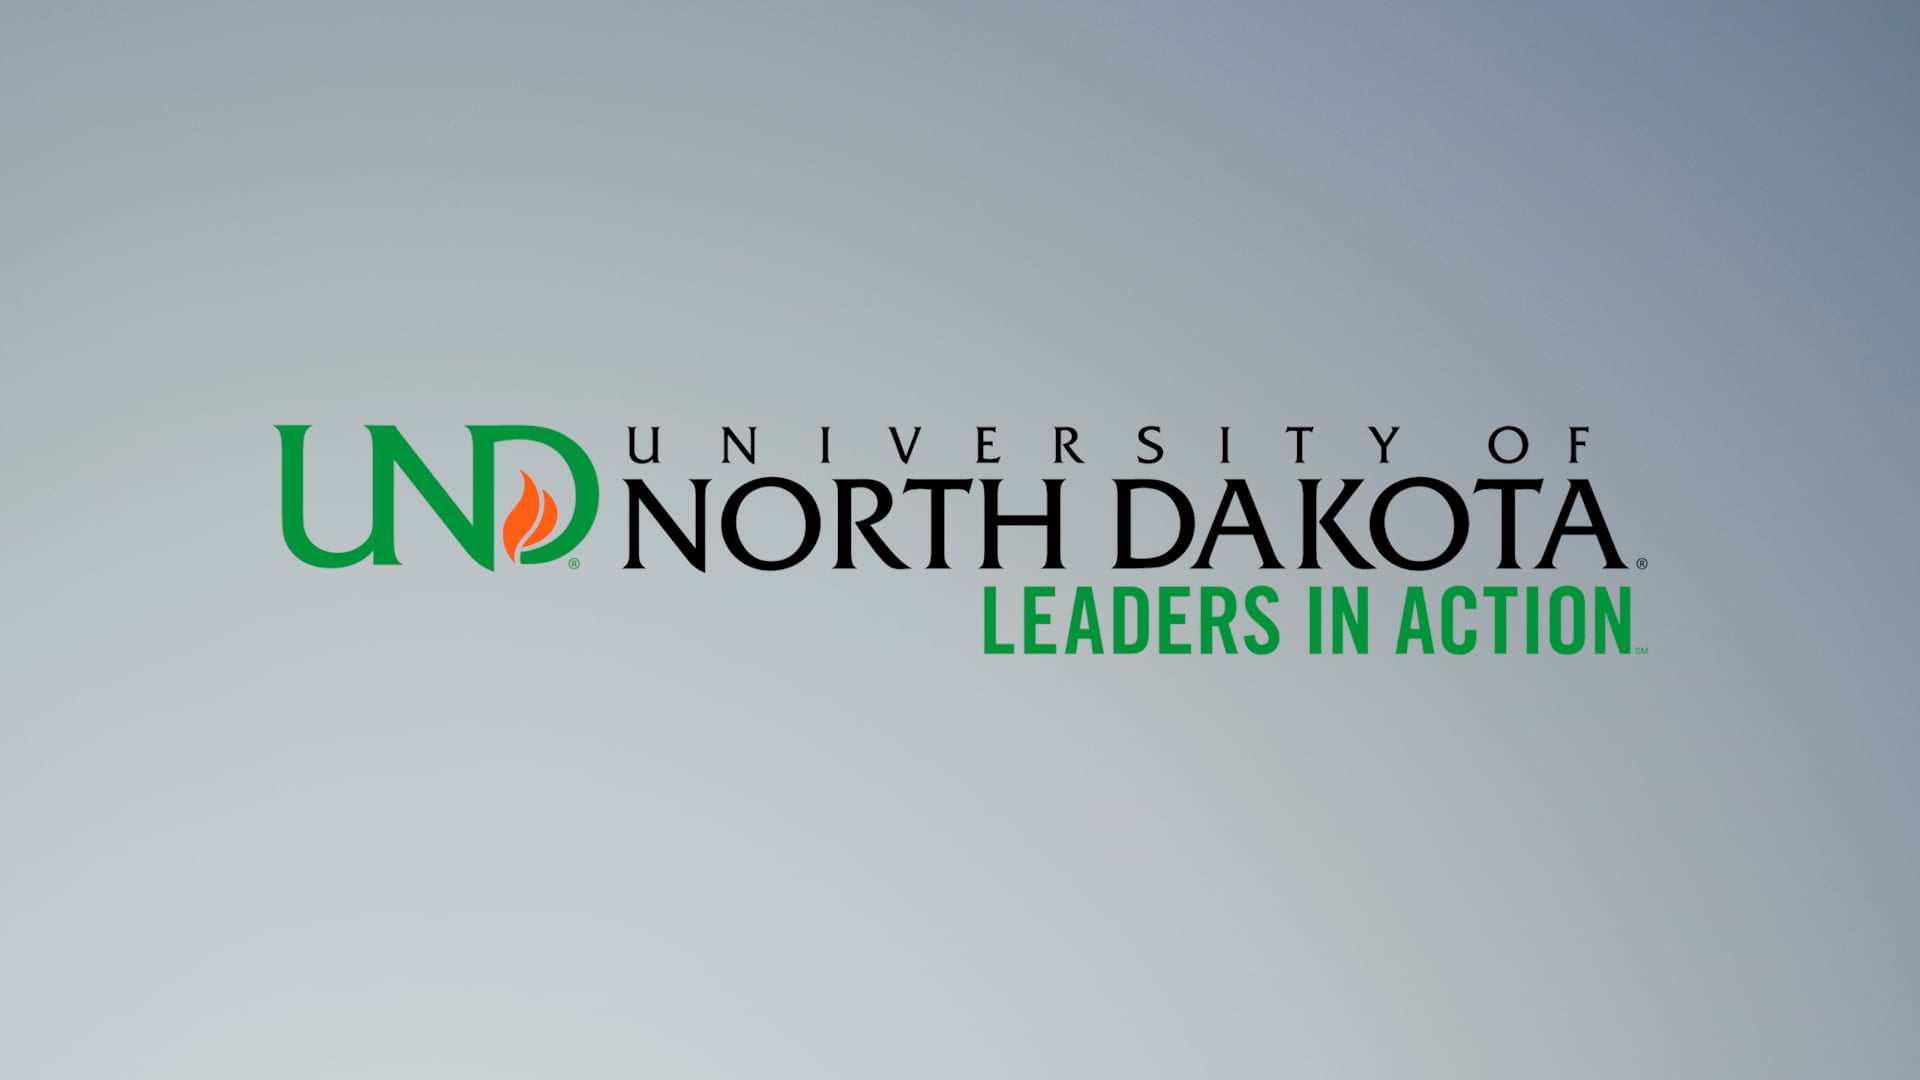 University of North Dakota "Lead Your Own Way" (:60)